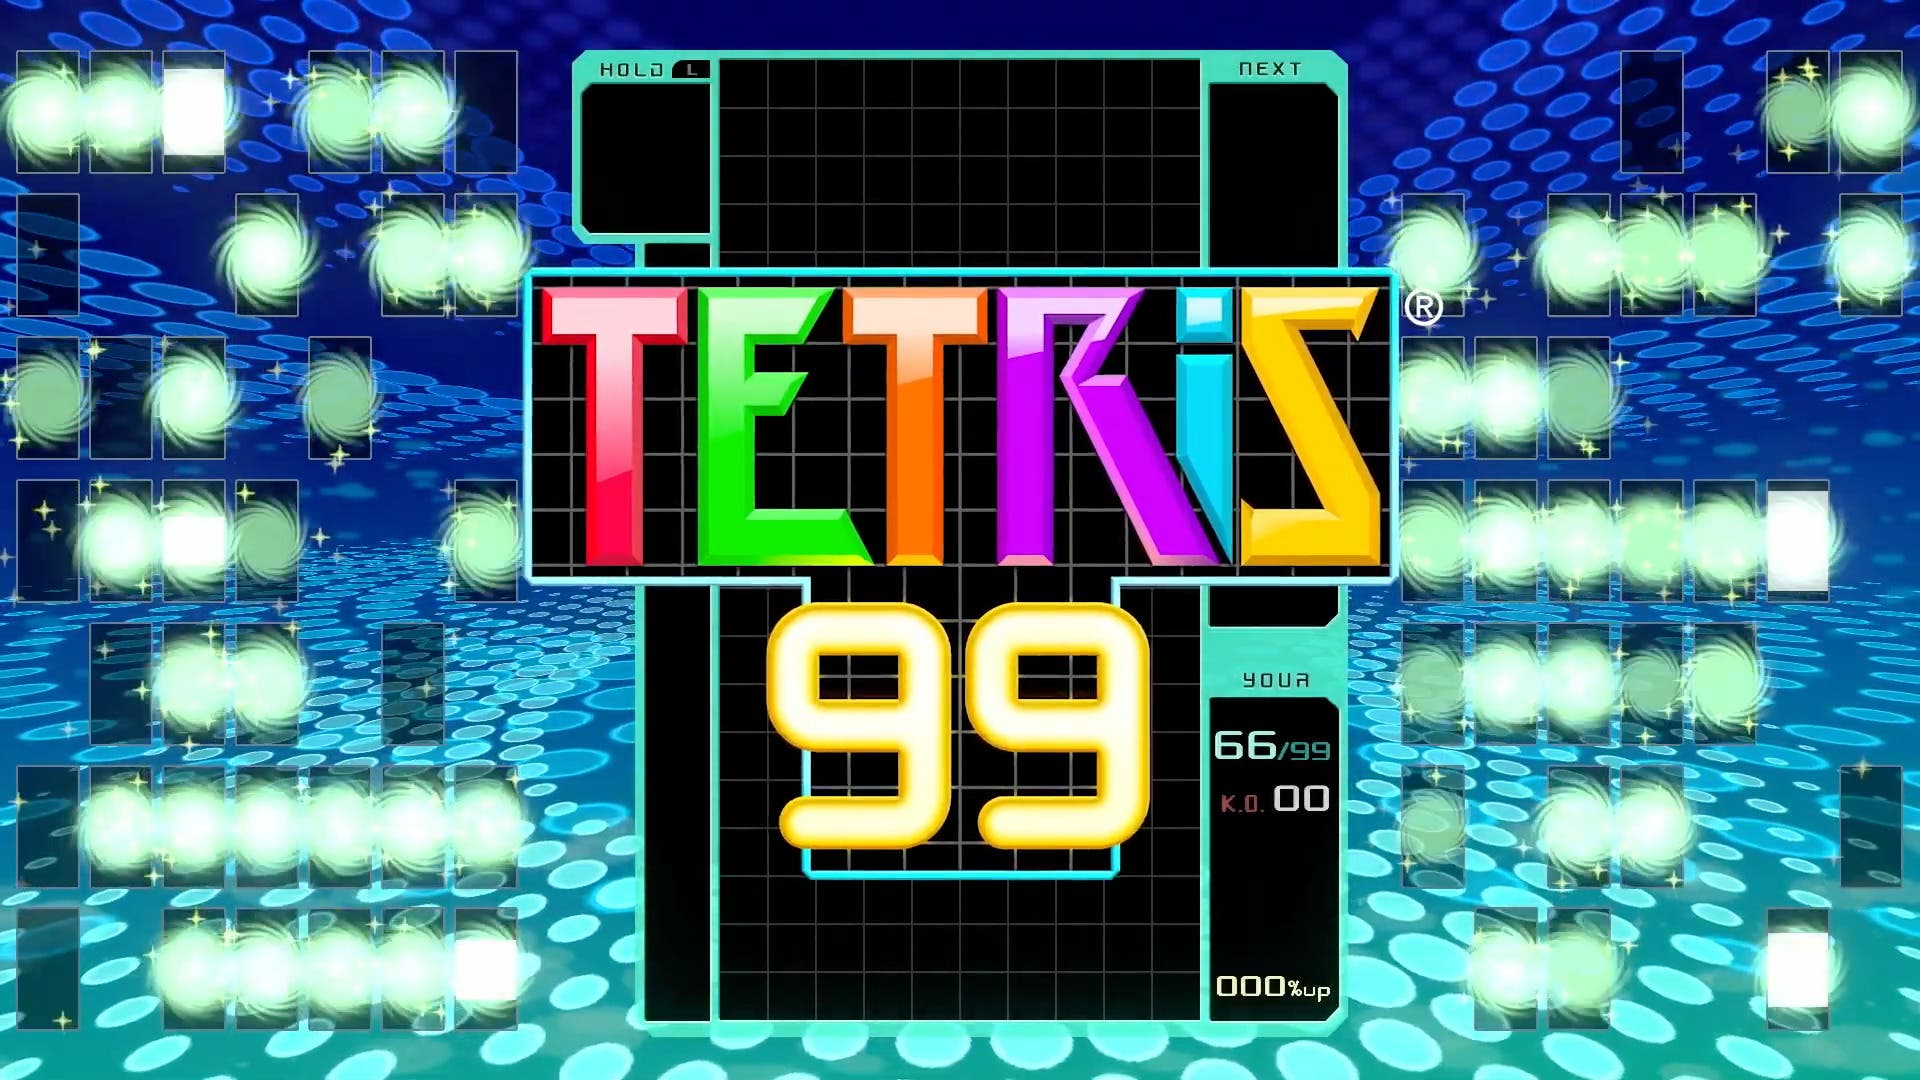 tetris 99 a battle royale tetris